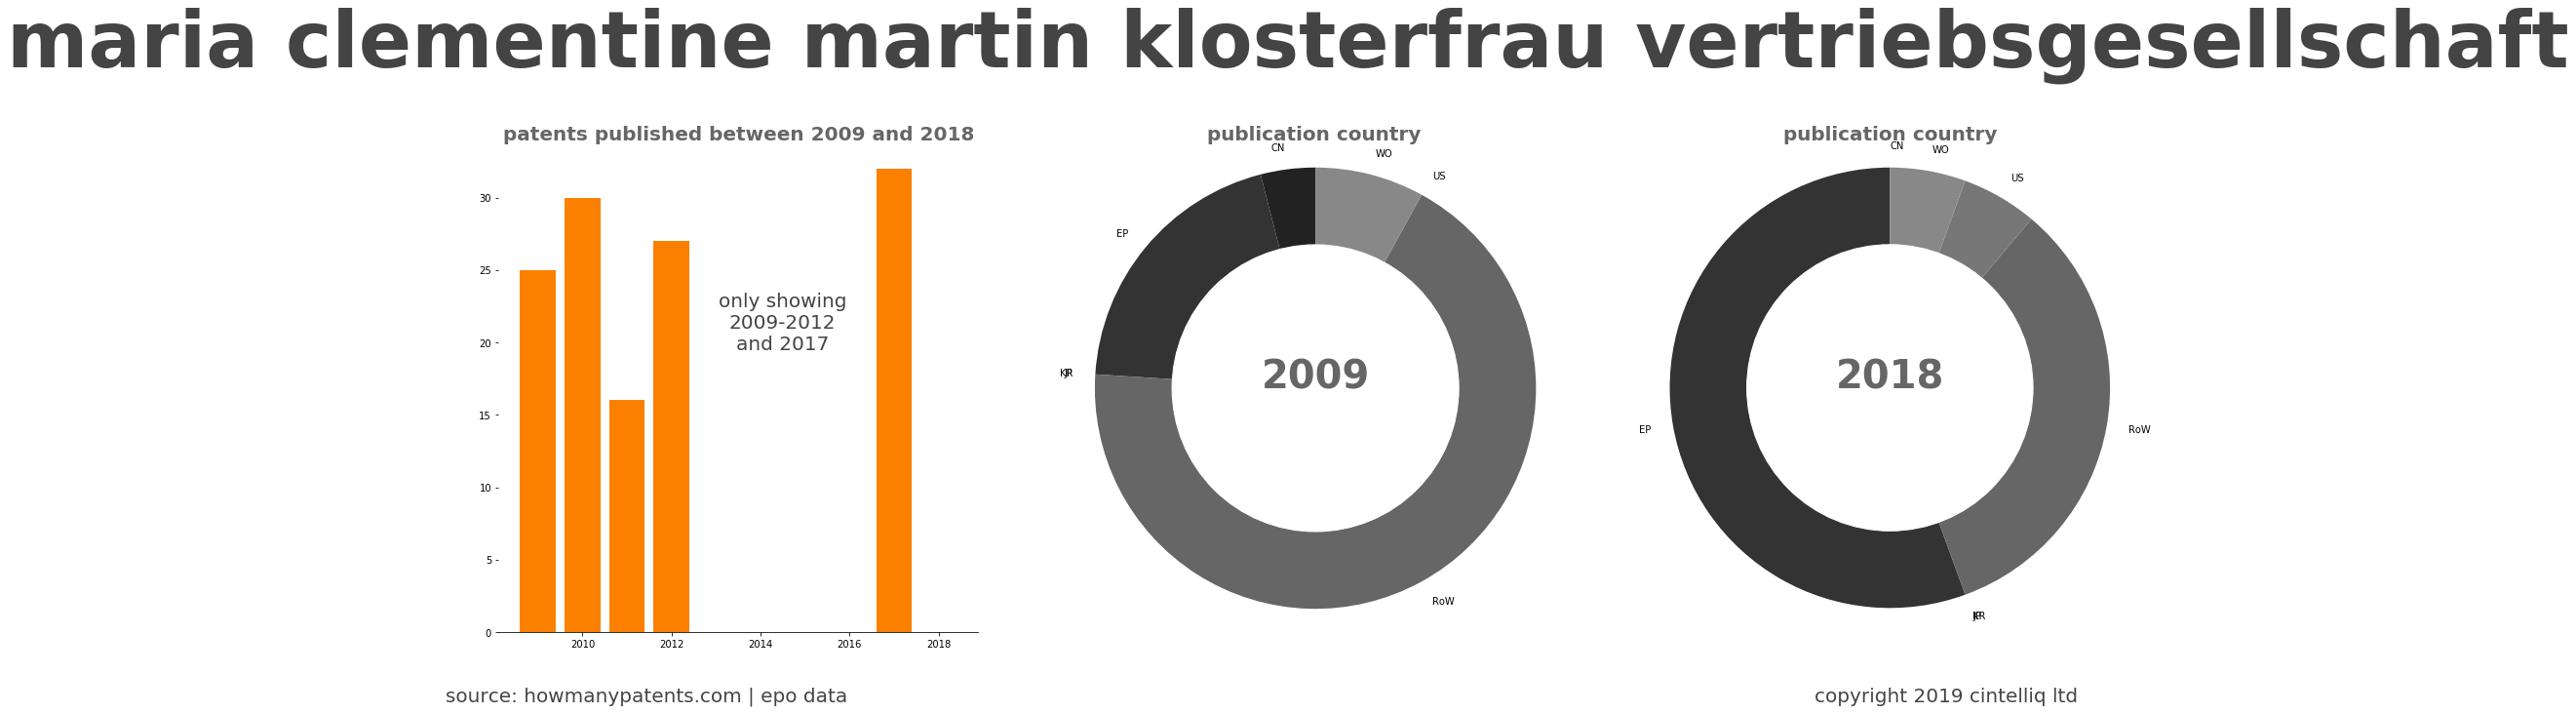 summary of patents for Maria Clementine Martin Klosterfrau Vertriebsgesellschaft